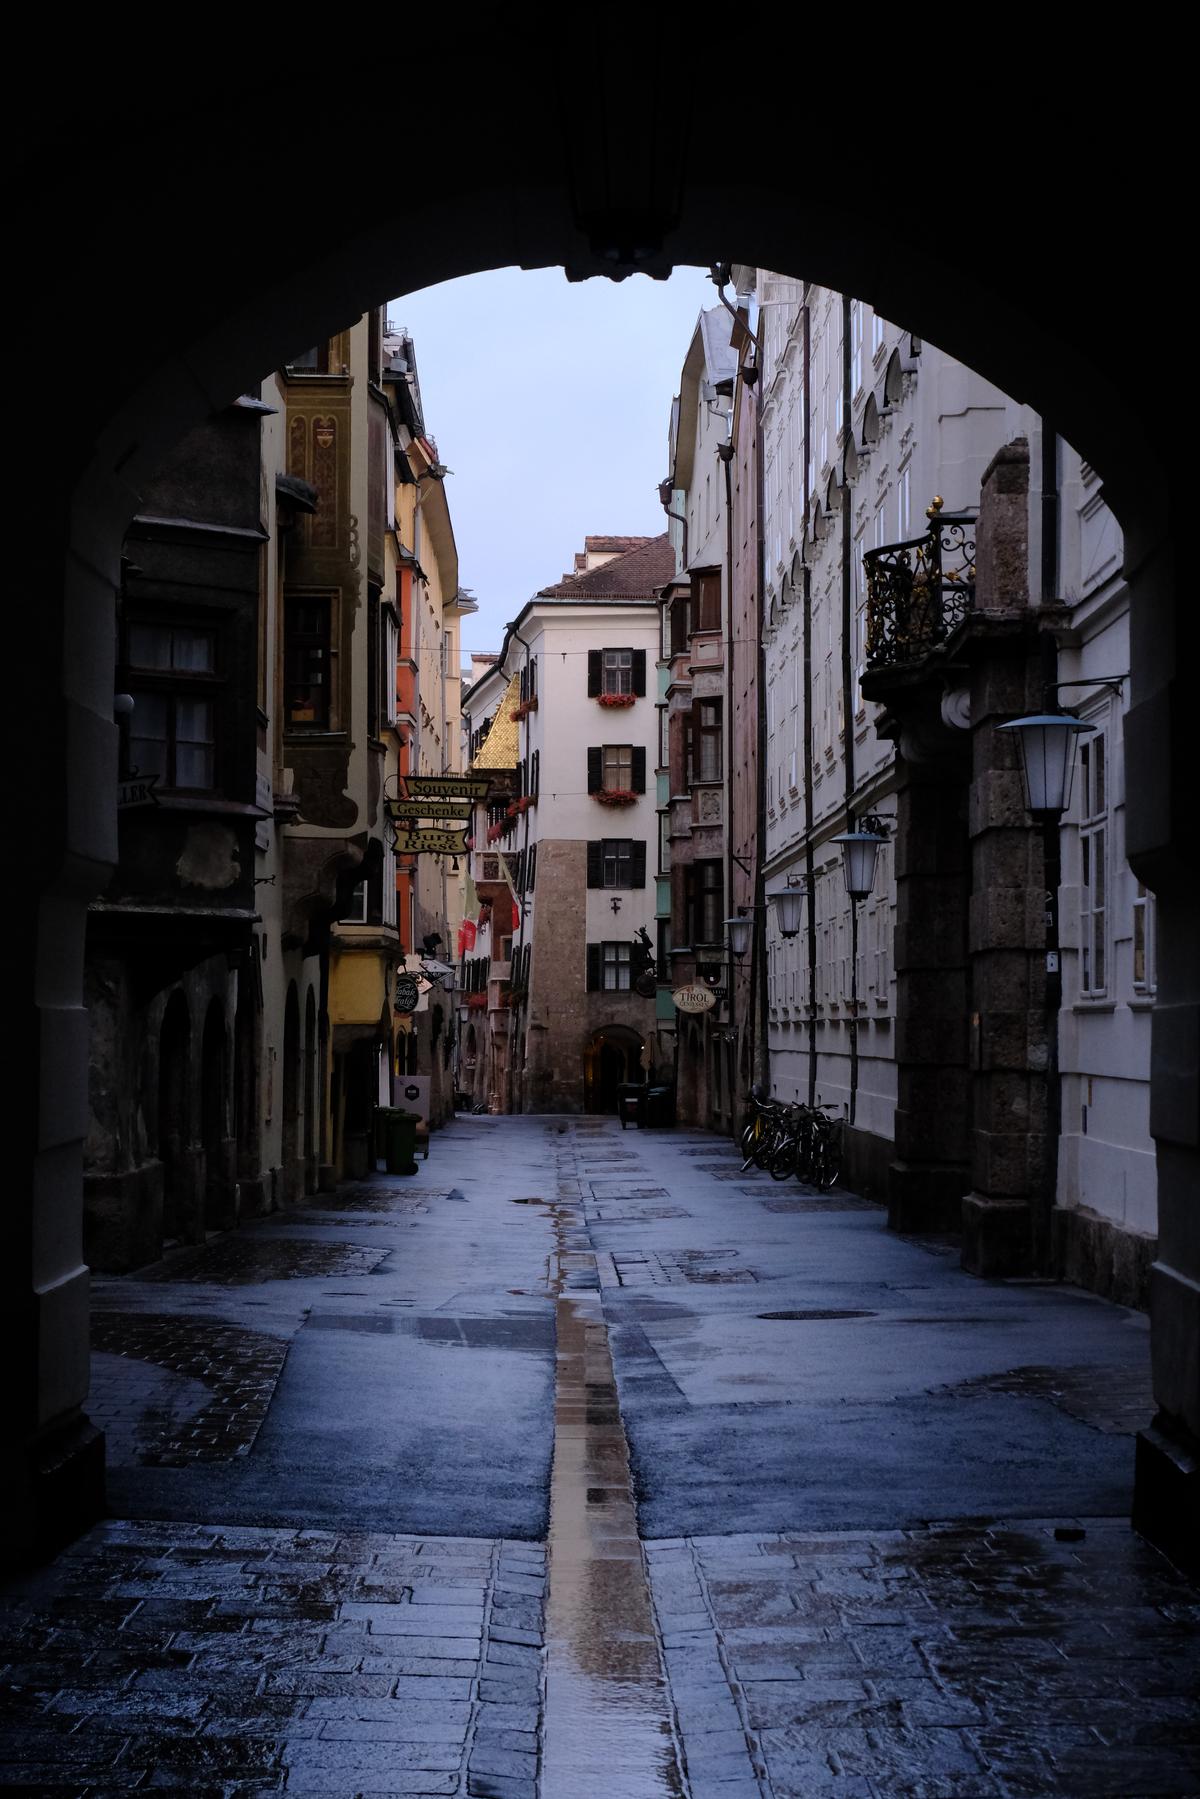 Looking down a street, through a tunnel after rain in Innsbruck, Austria